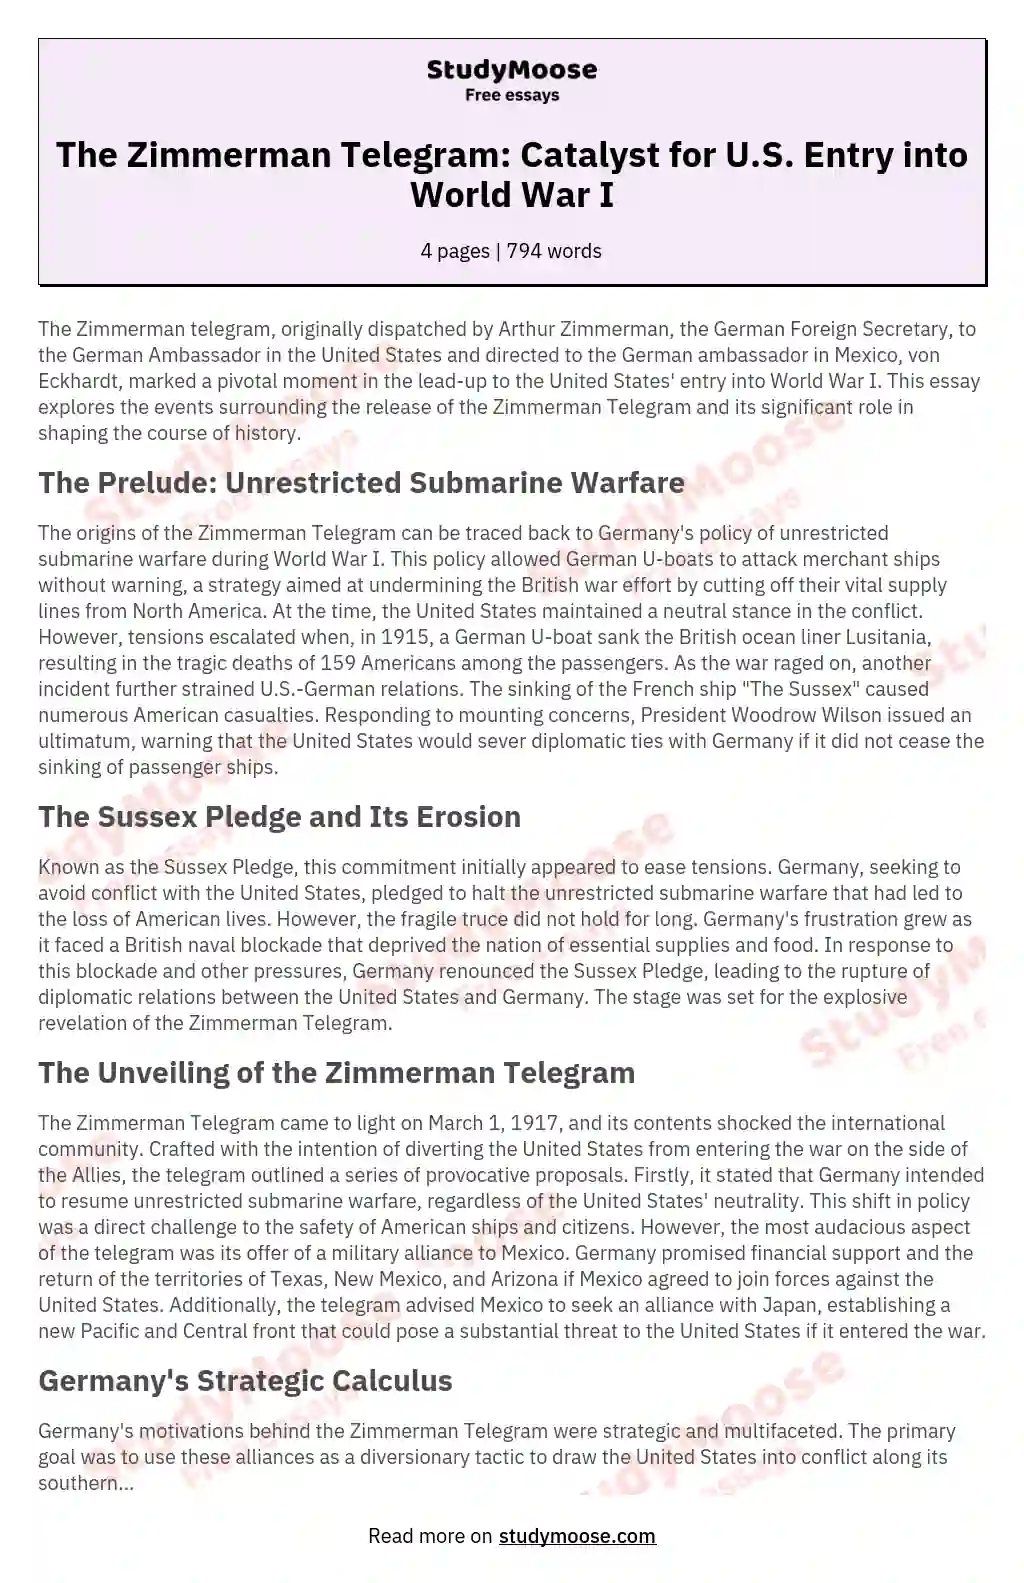 The Zimmerman Telegram: Catalyst for U.S. Entry into World War I essay